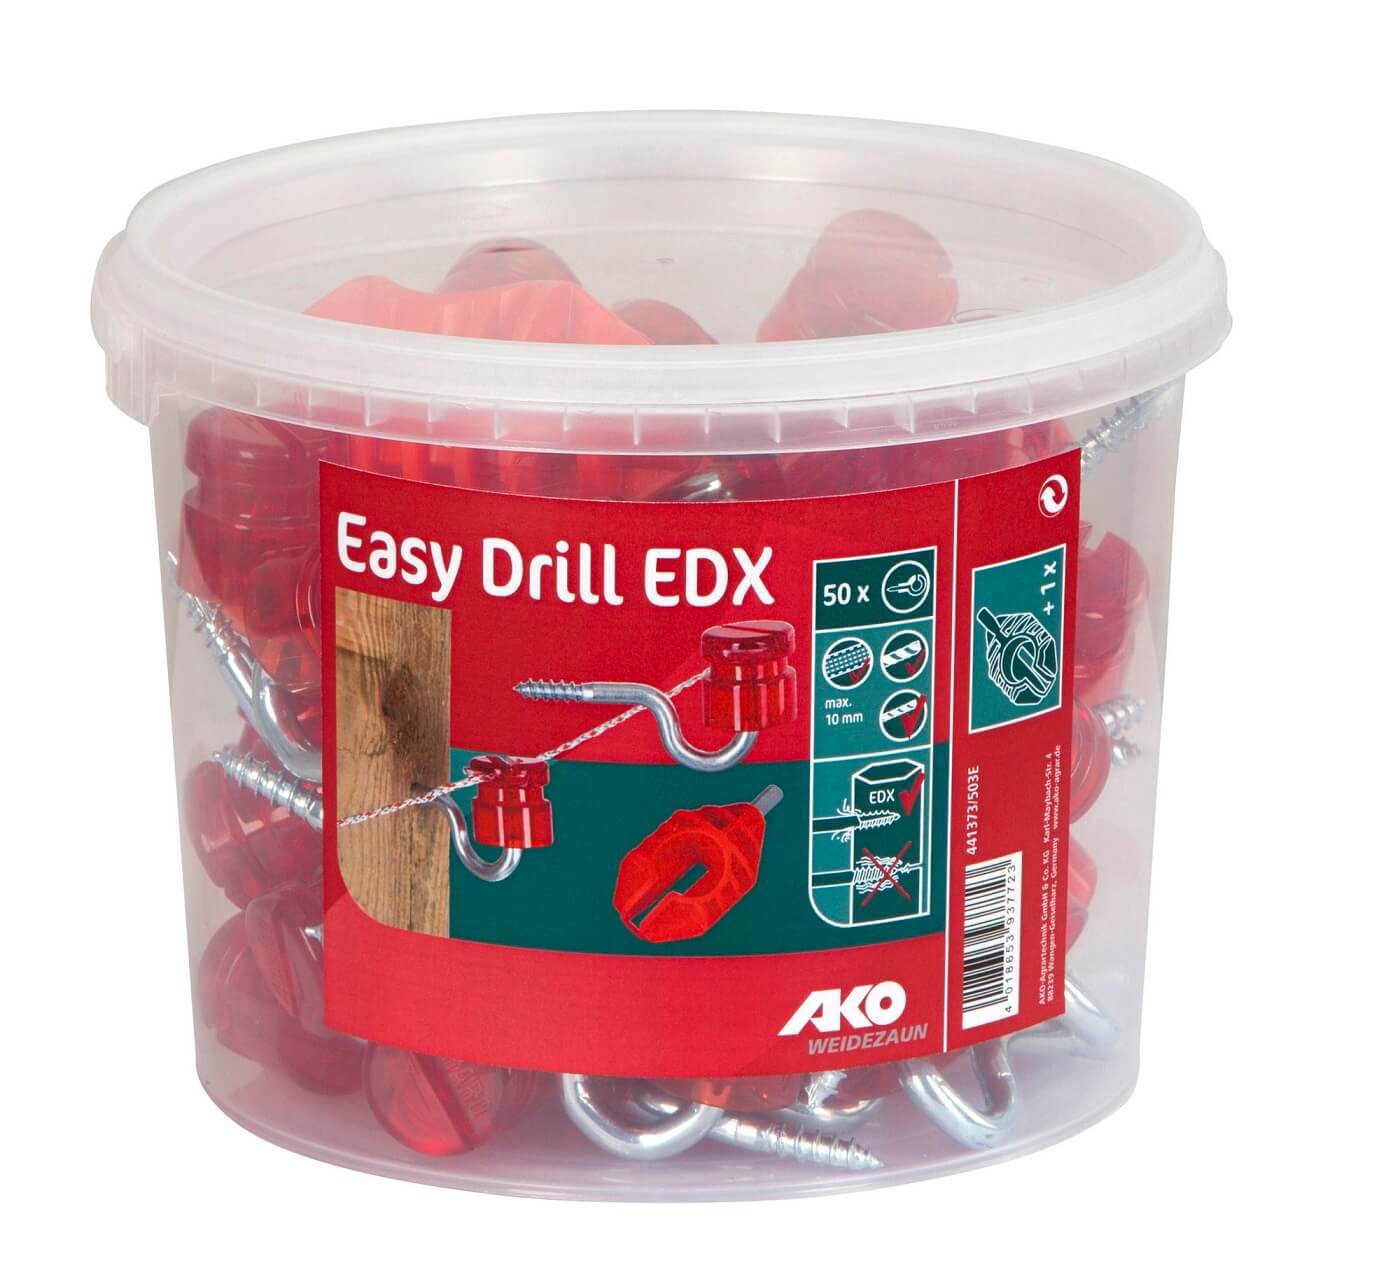 AKO Premium Schlitzisolator Easy Drill EDX